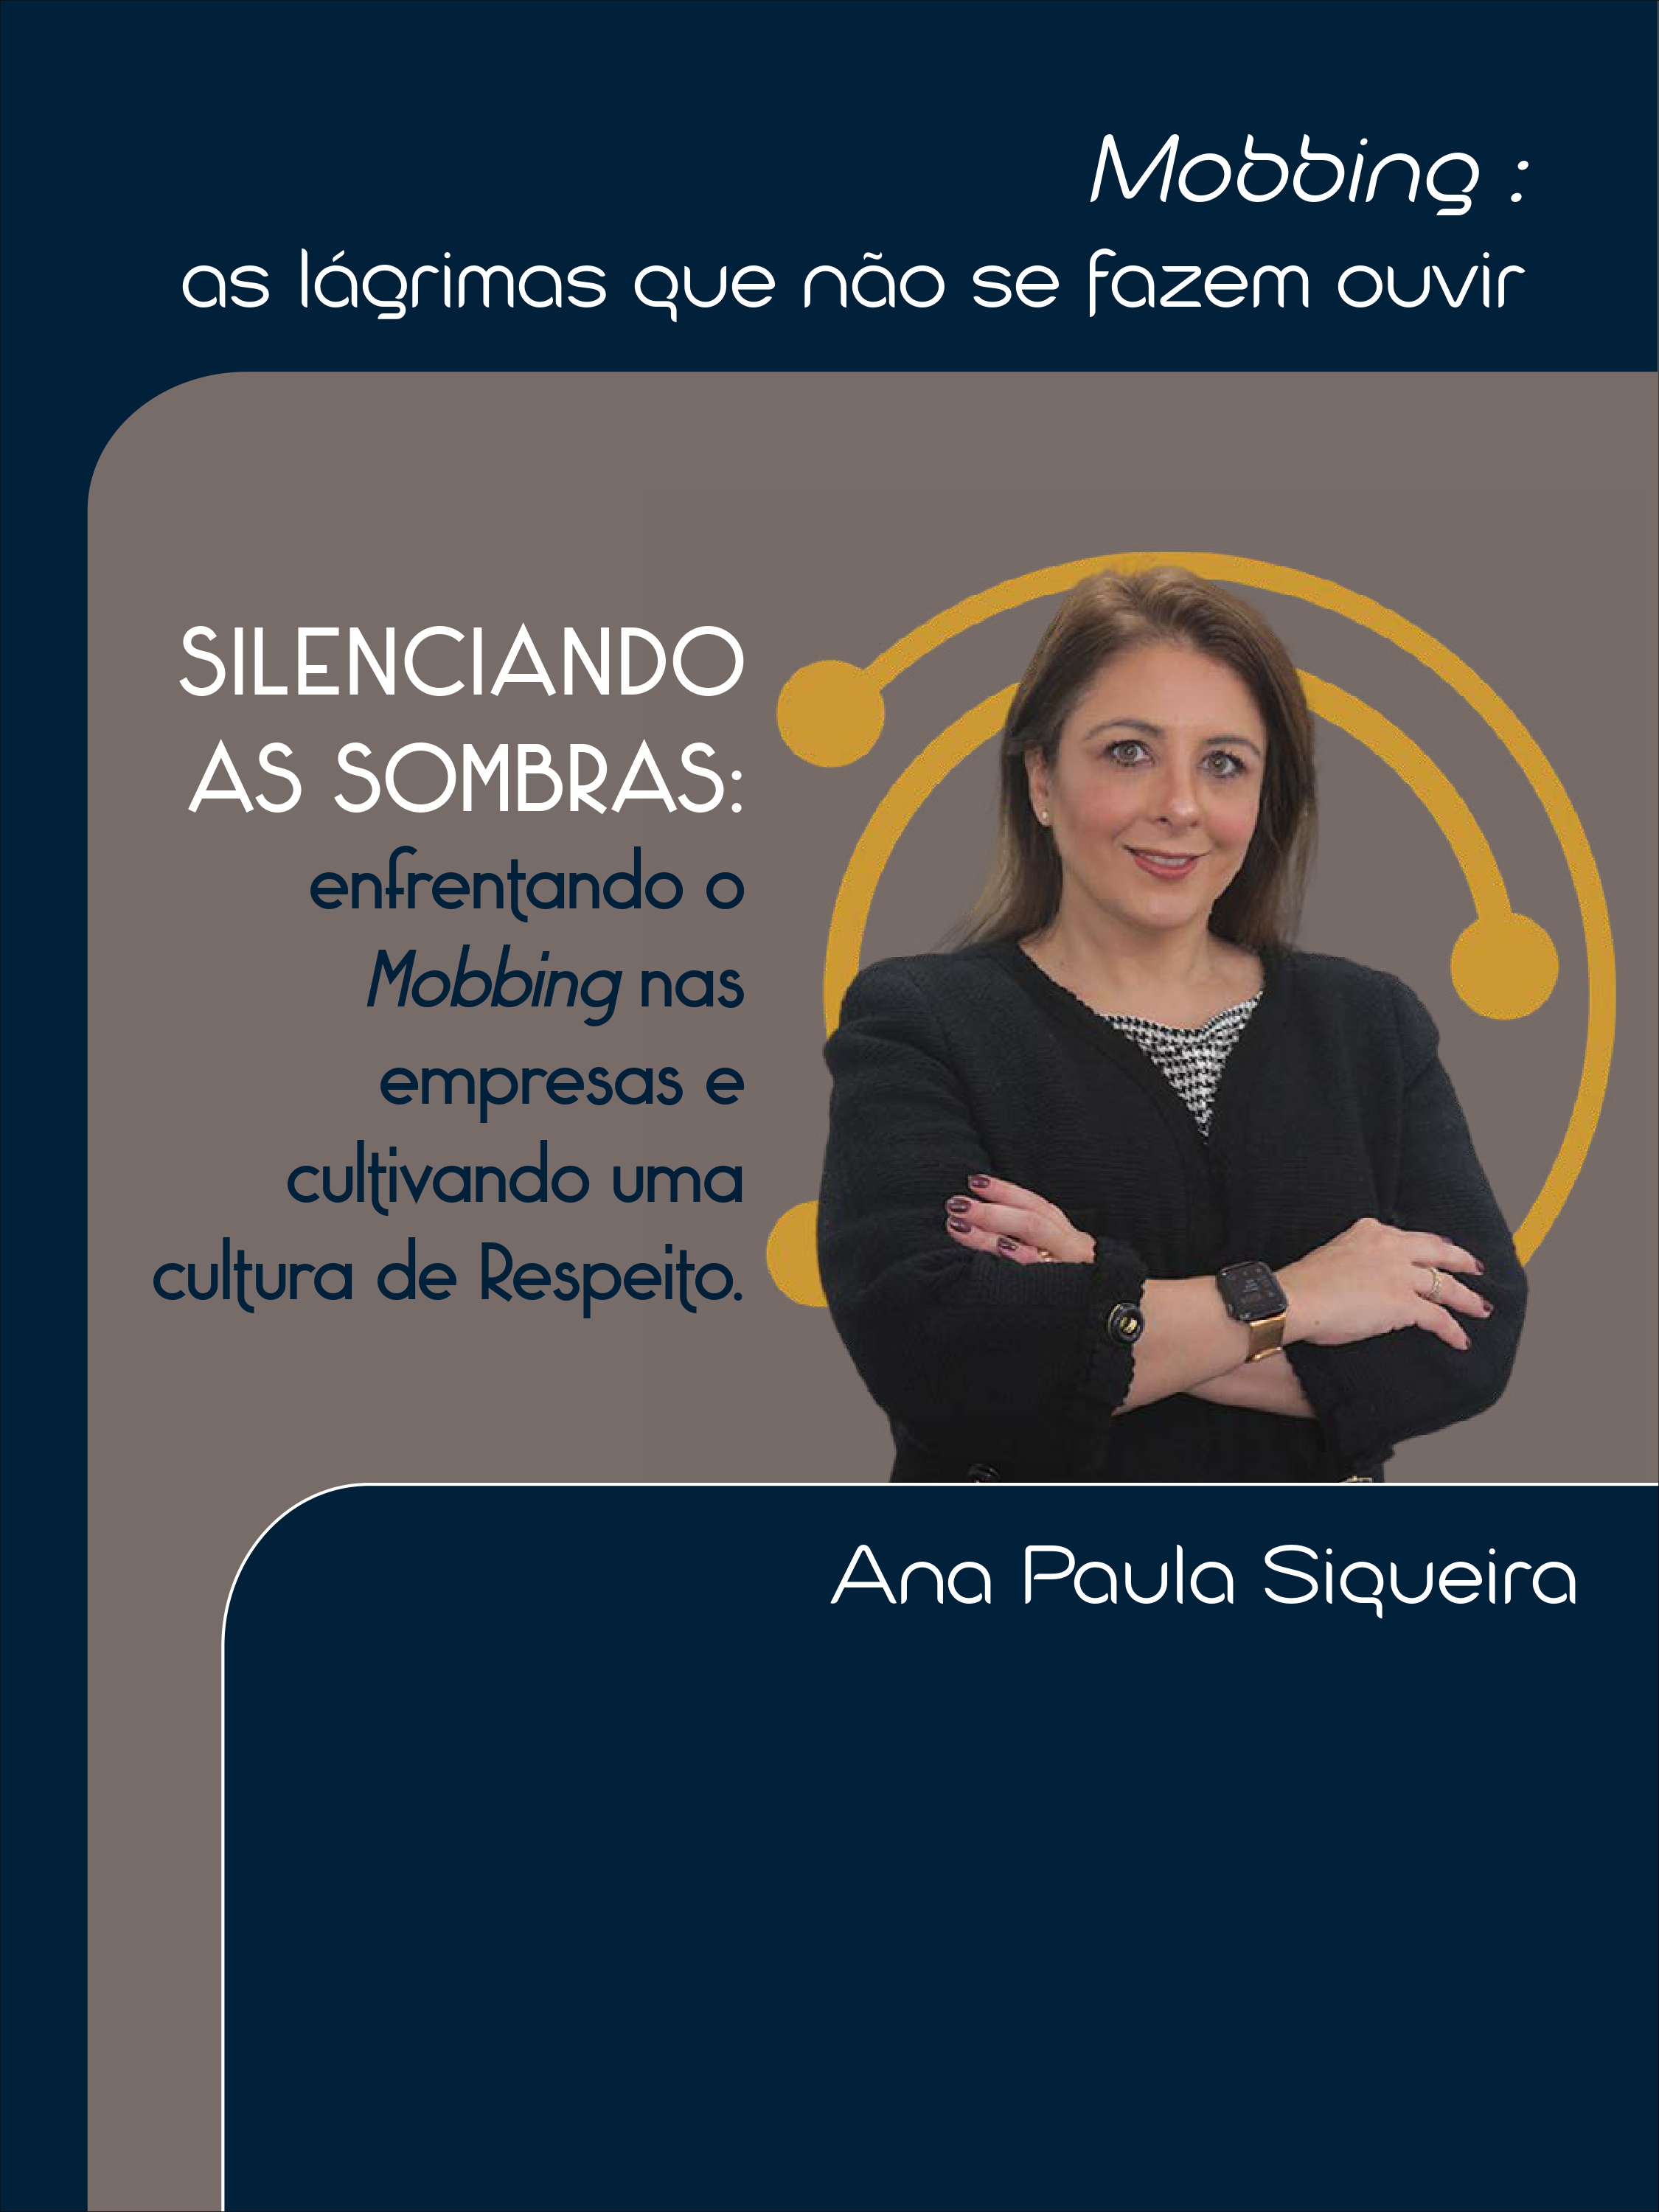 E-book: MOBBING (Ana Paula Siqueira)